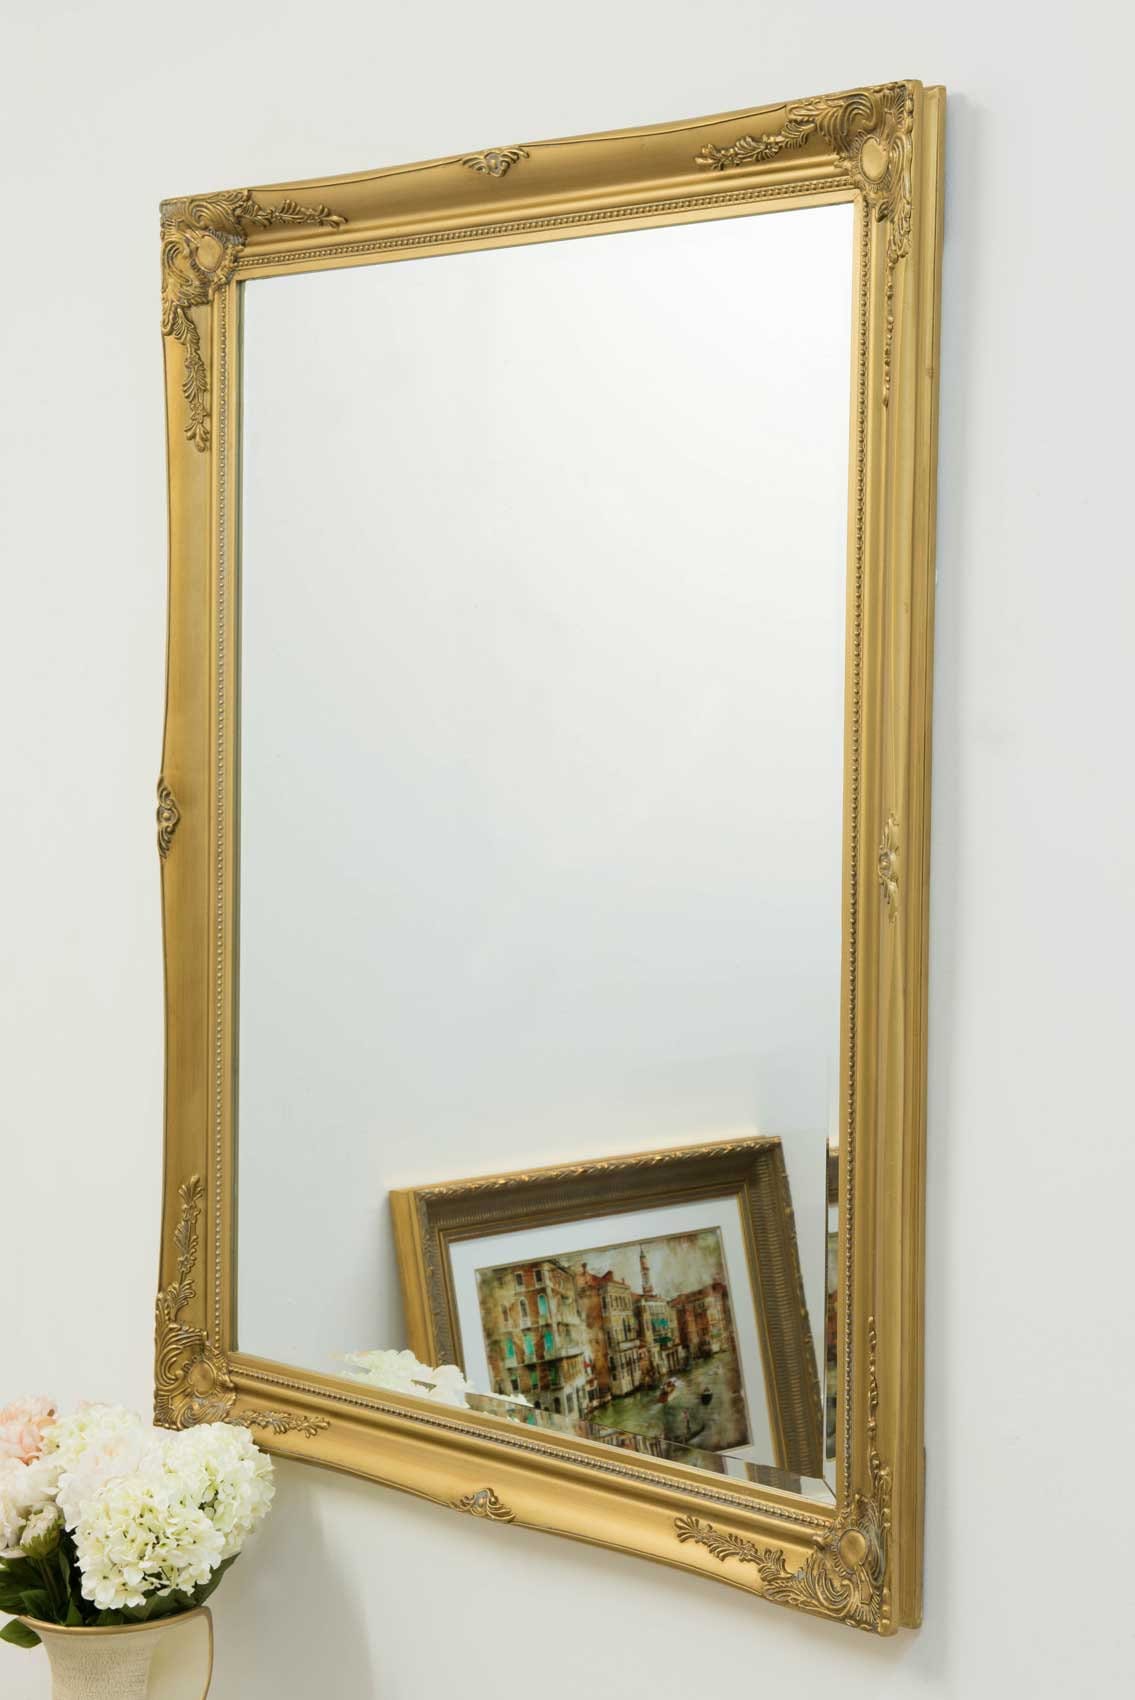 Extra Large Classic Ornate Styled Gold Mirror 4ft7 X 3ft7 - Etsy UK